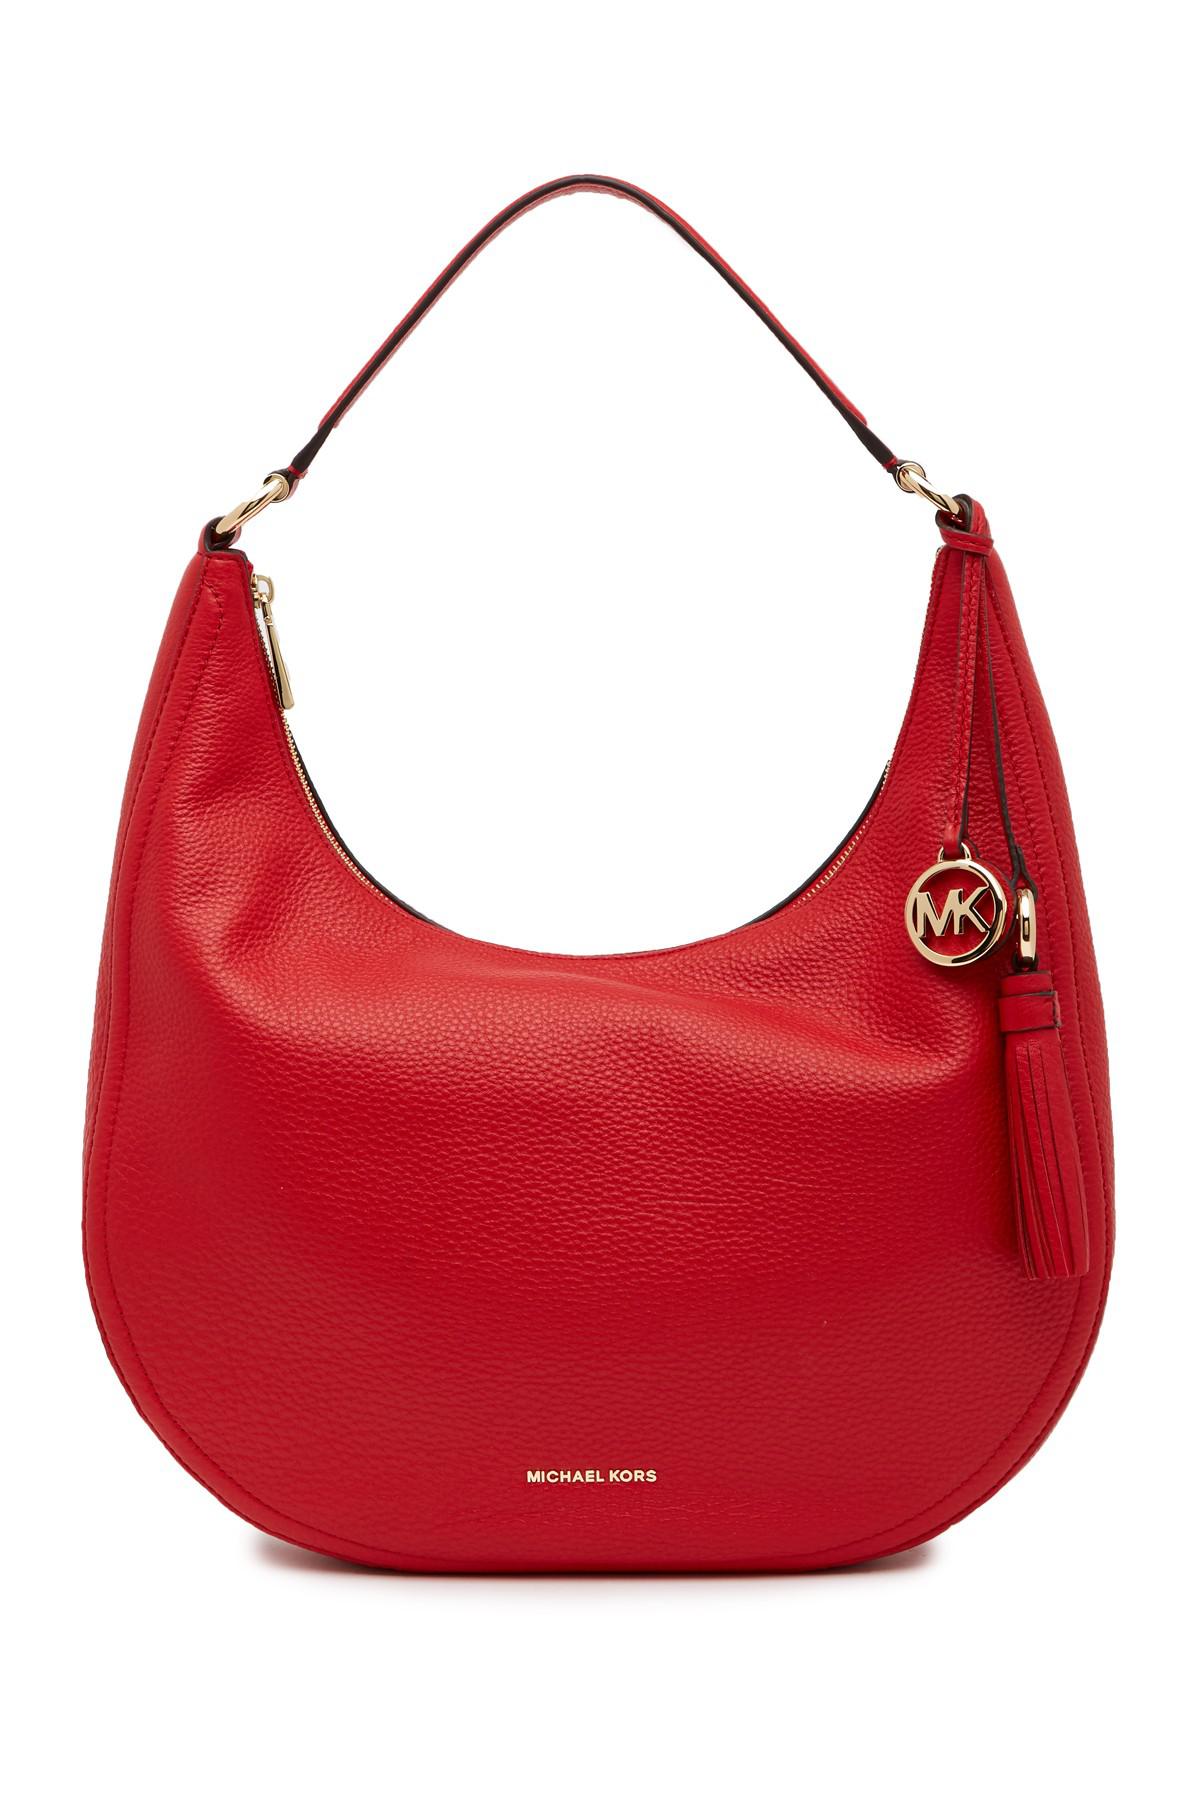 Michael Kors Women's Leather Bag - Red